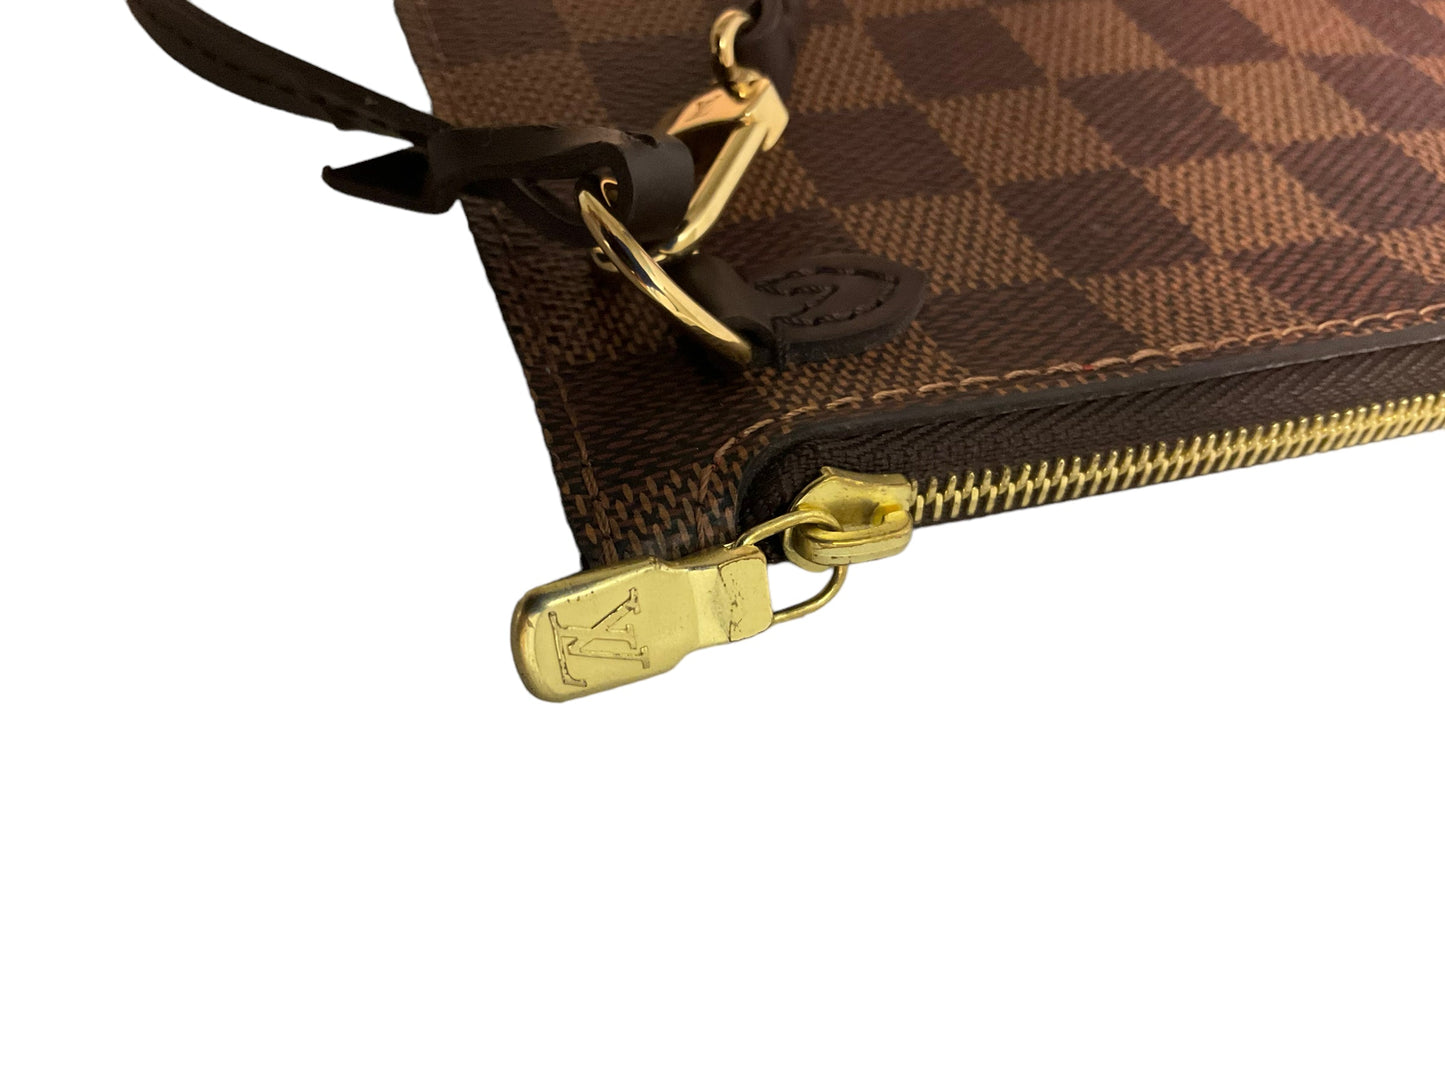 Checkered Pattern Handbag Luxury Designer Louis Vuitton, Size Small